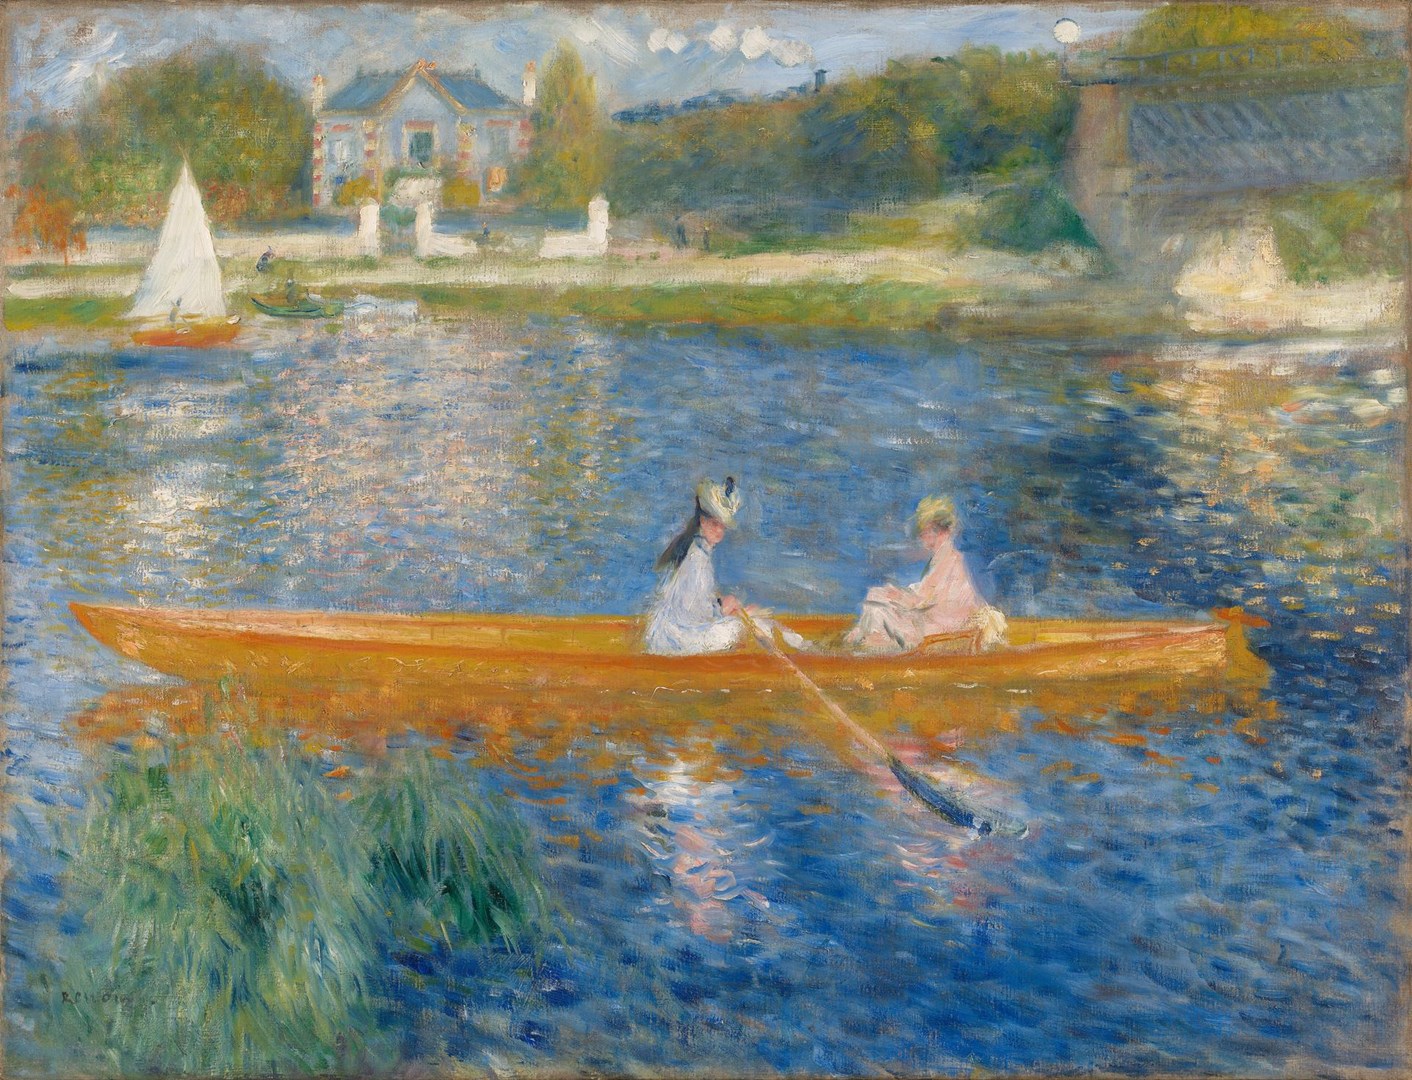 Скиф (La Yole) by Pierre-Auguste Renoir - 1875 - 71 х 92 см 